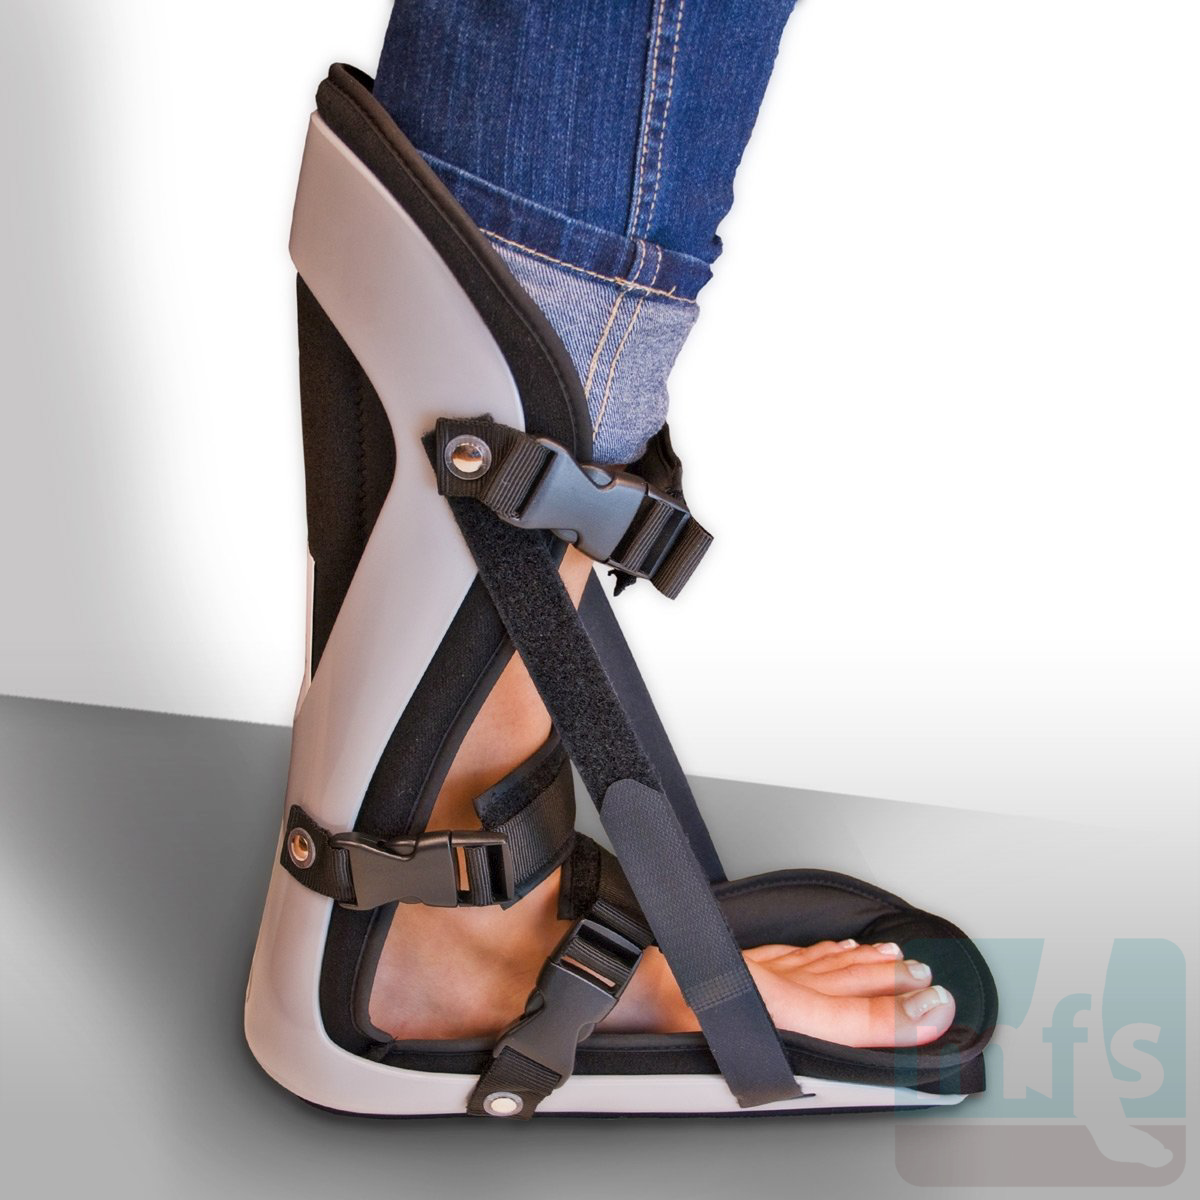 Quanquer-Plantar Fasciitis Night Splint Foot : : Health